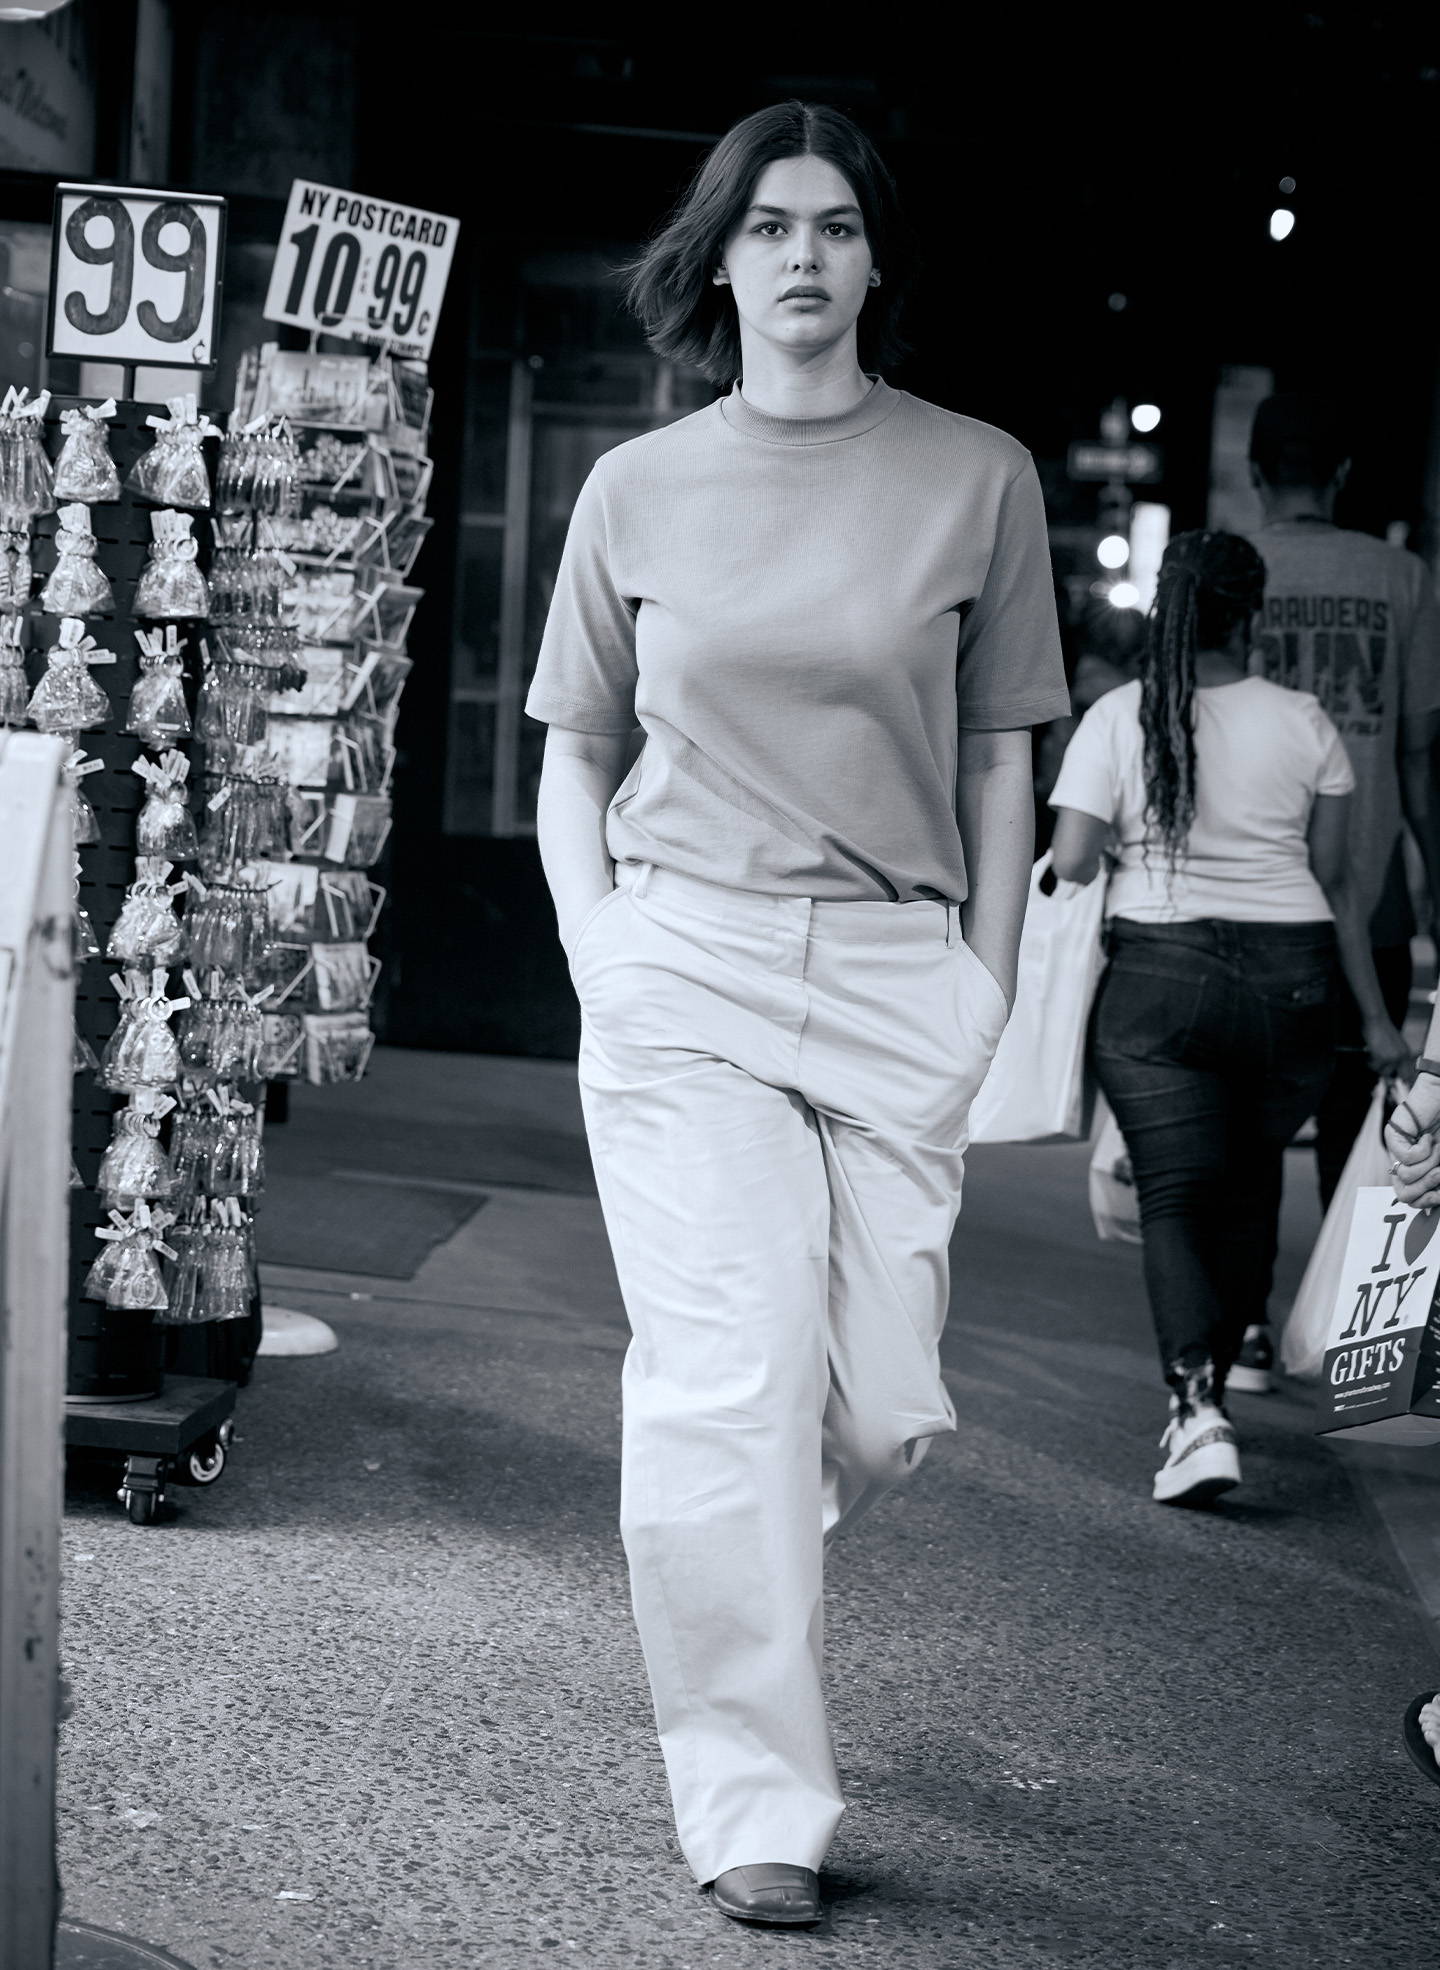 model walking in front of souvenir shop